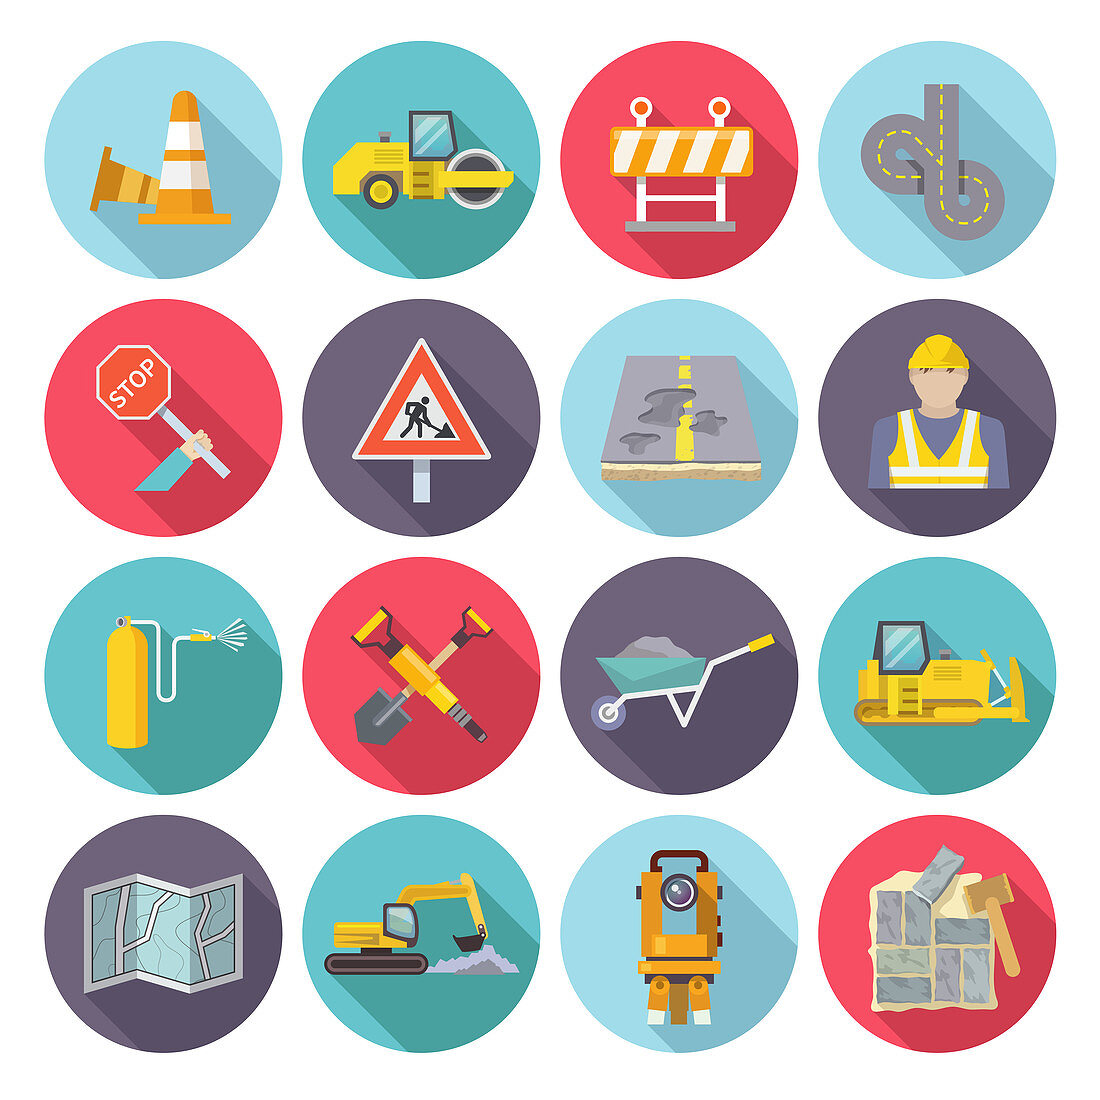 Roadwork icons, illustration